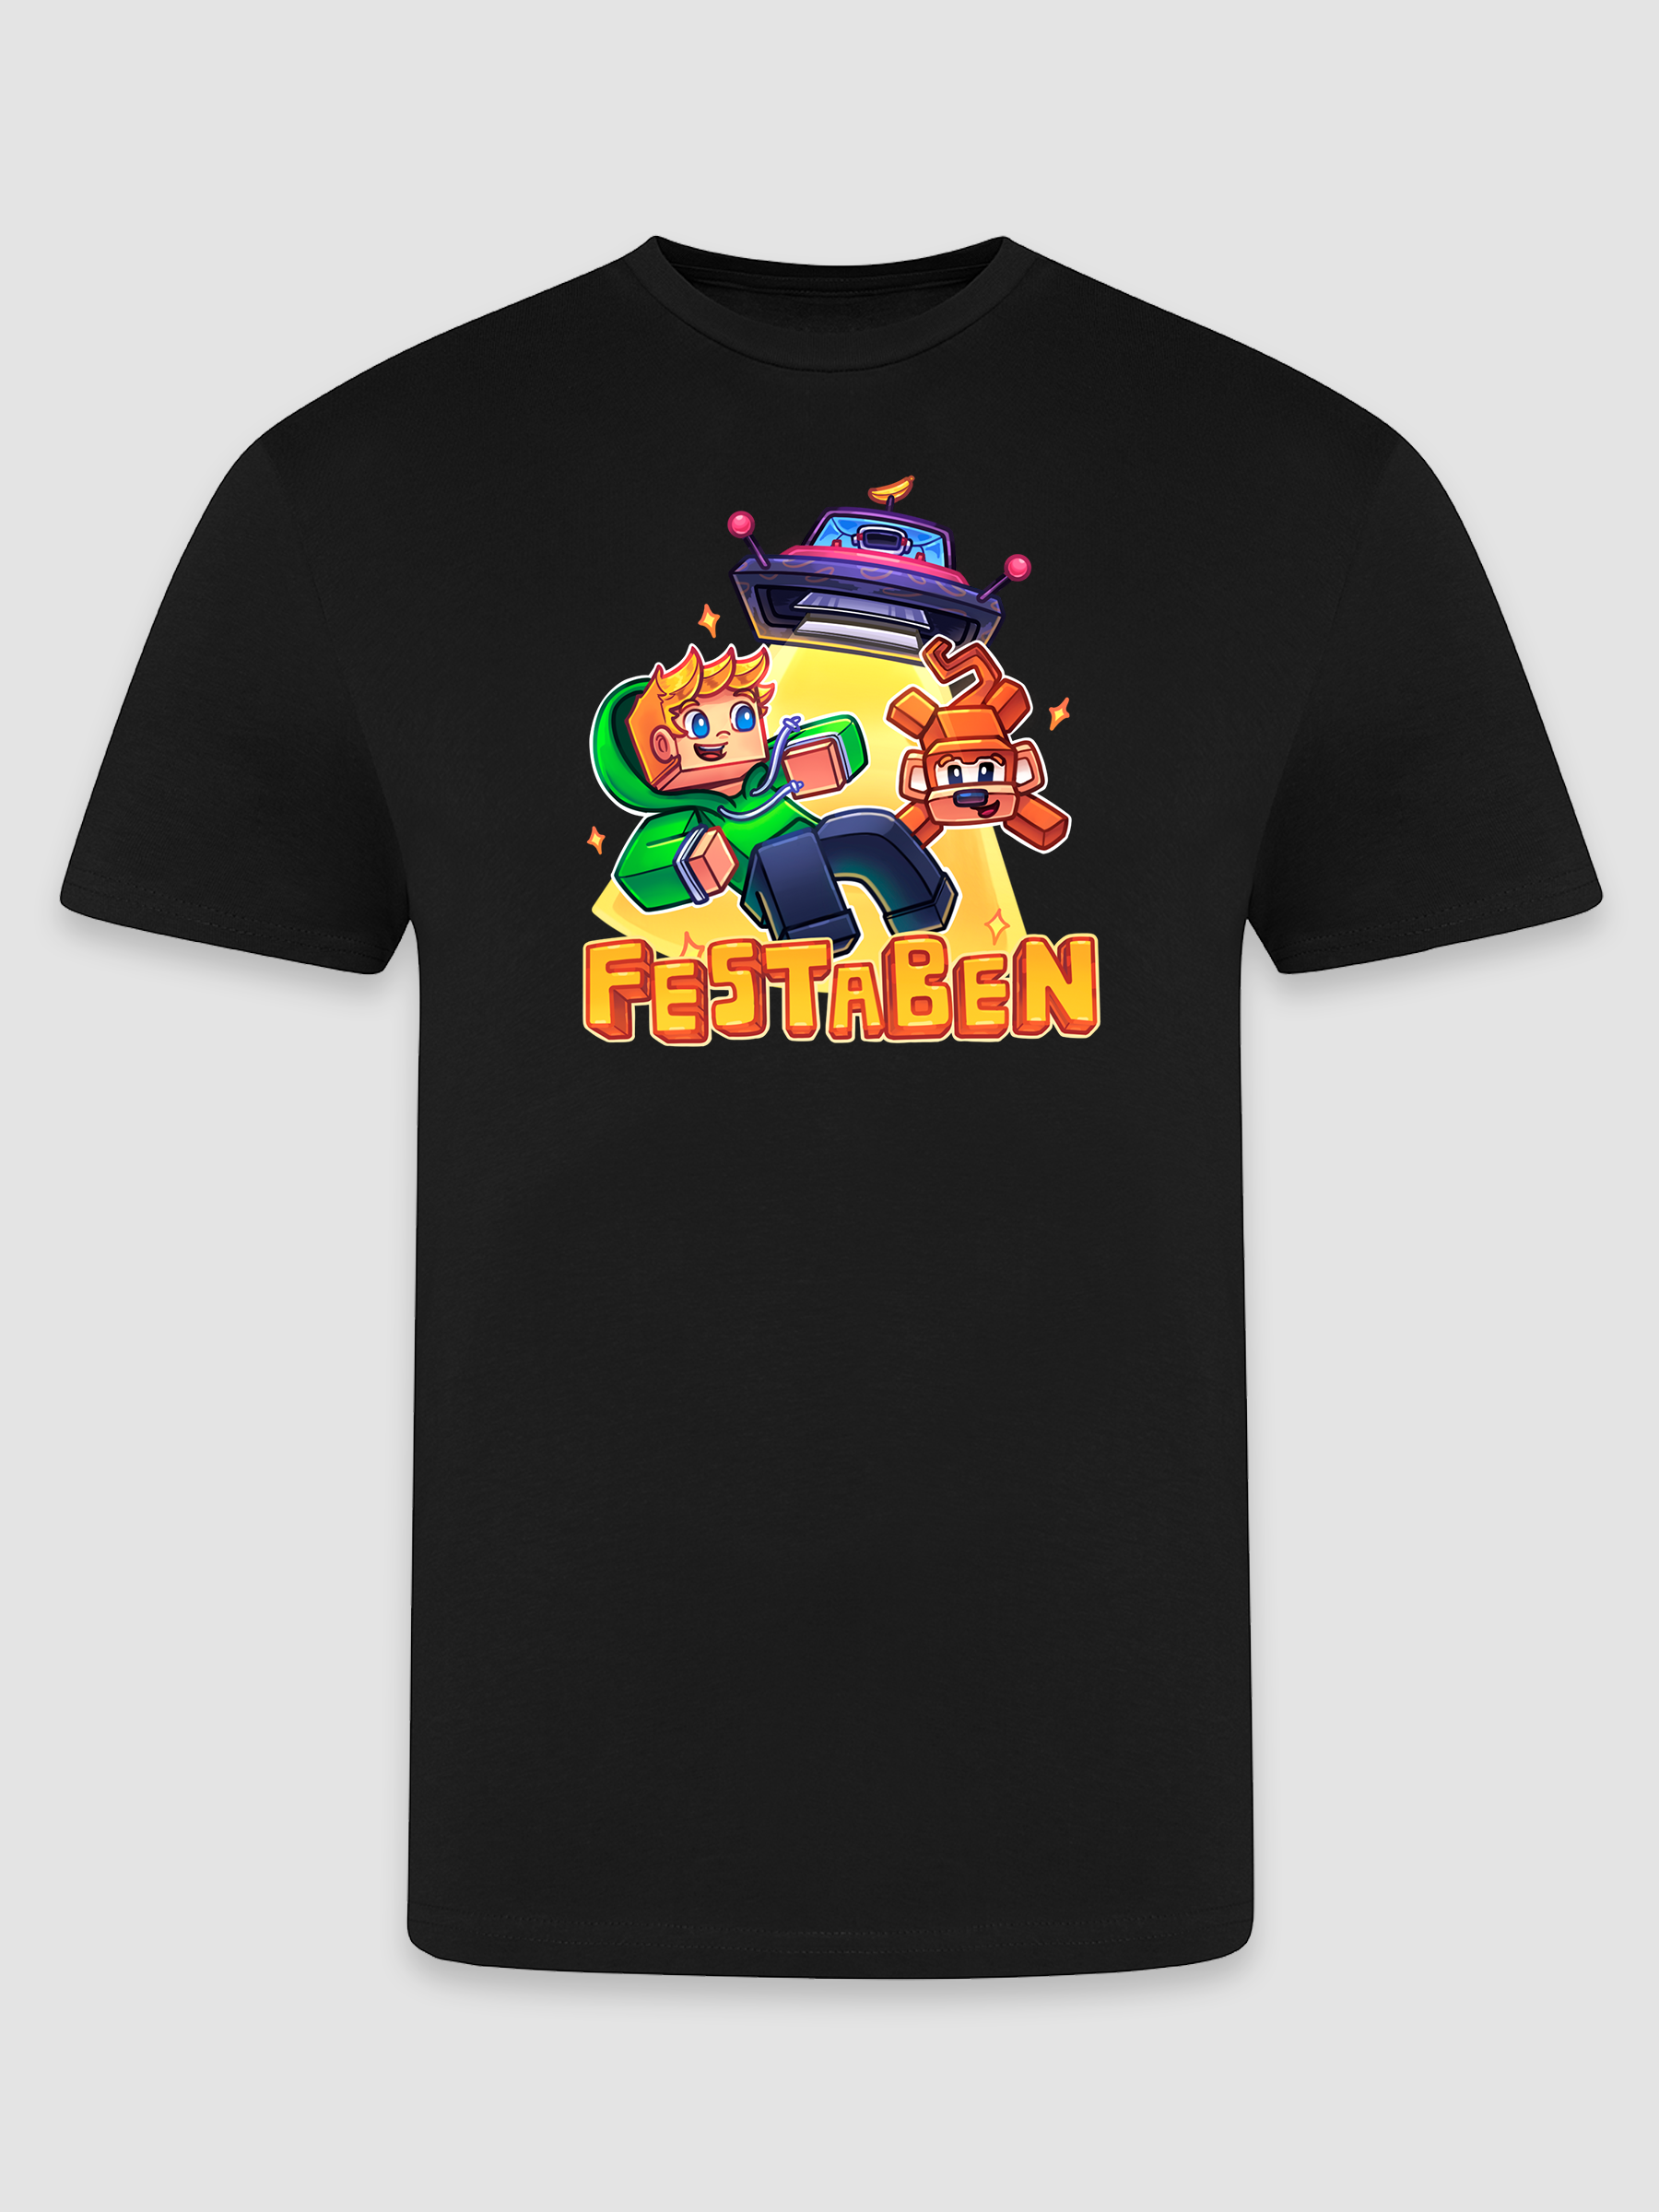 Festaben UFO - Sort T-Shirt